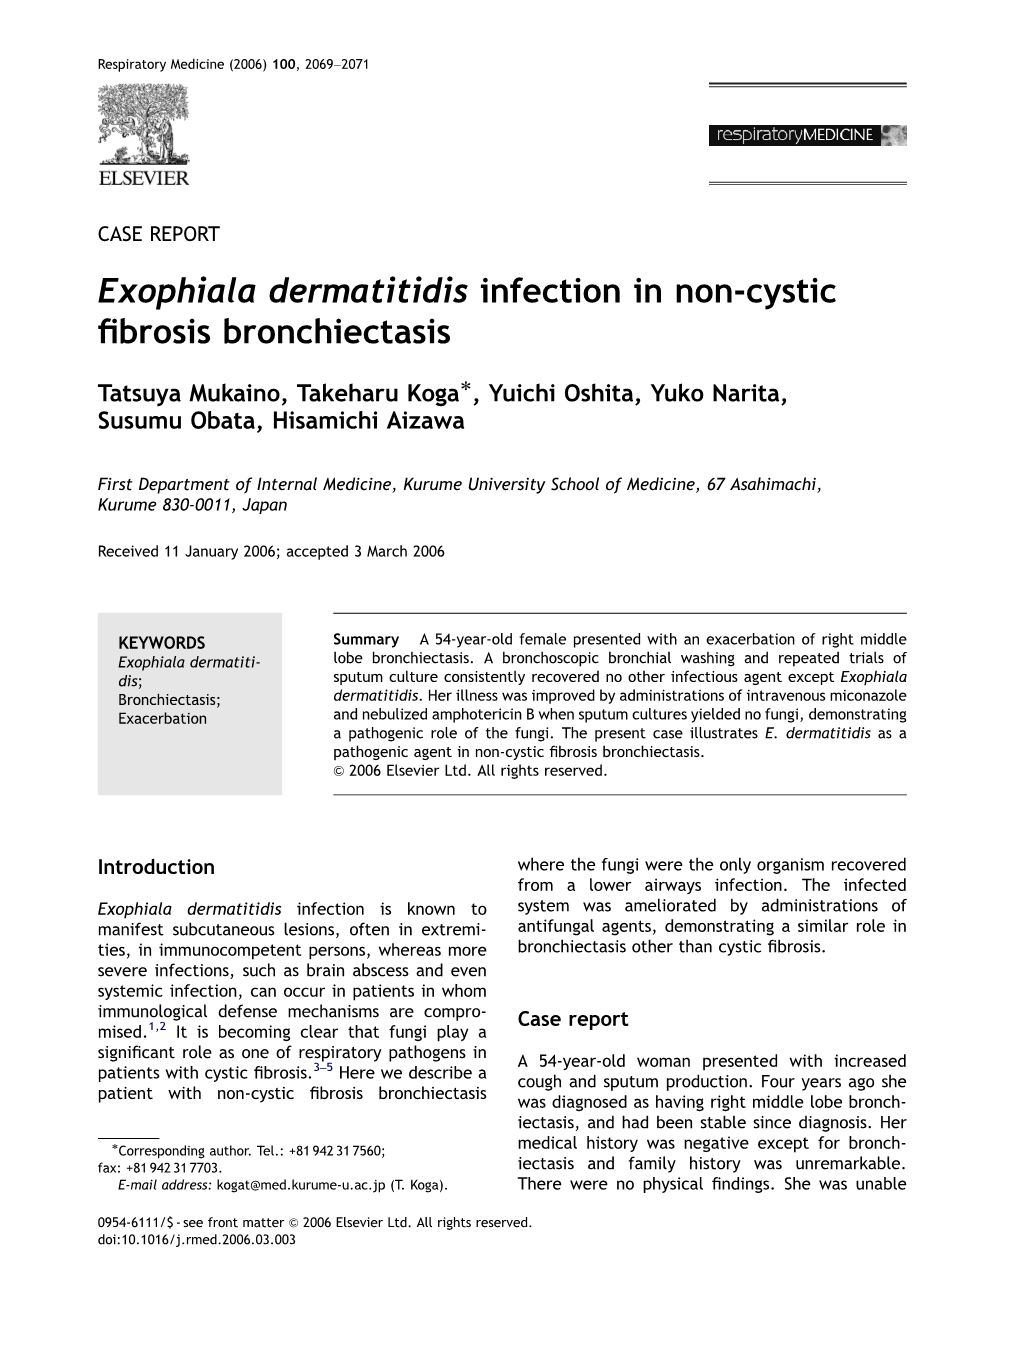 Exophiala Dermatitidis Infection in Non-Cystic Fibrosis Bronchiectasis